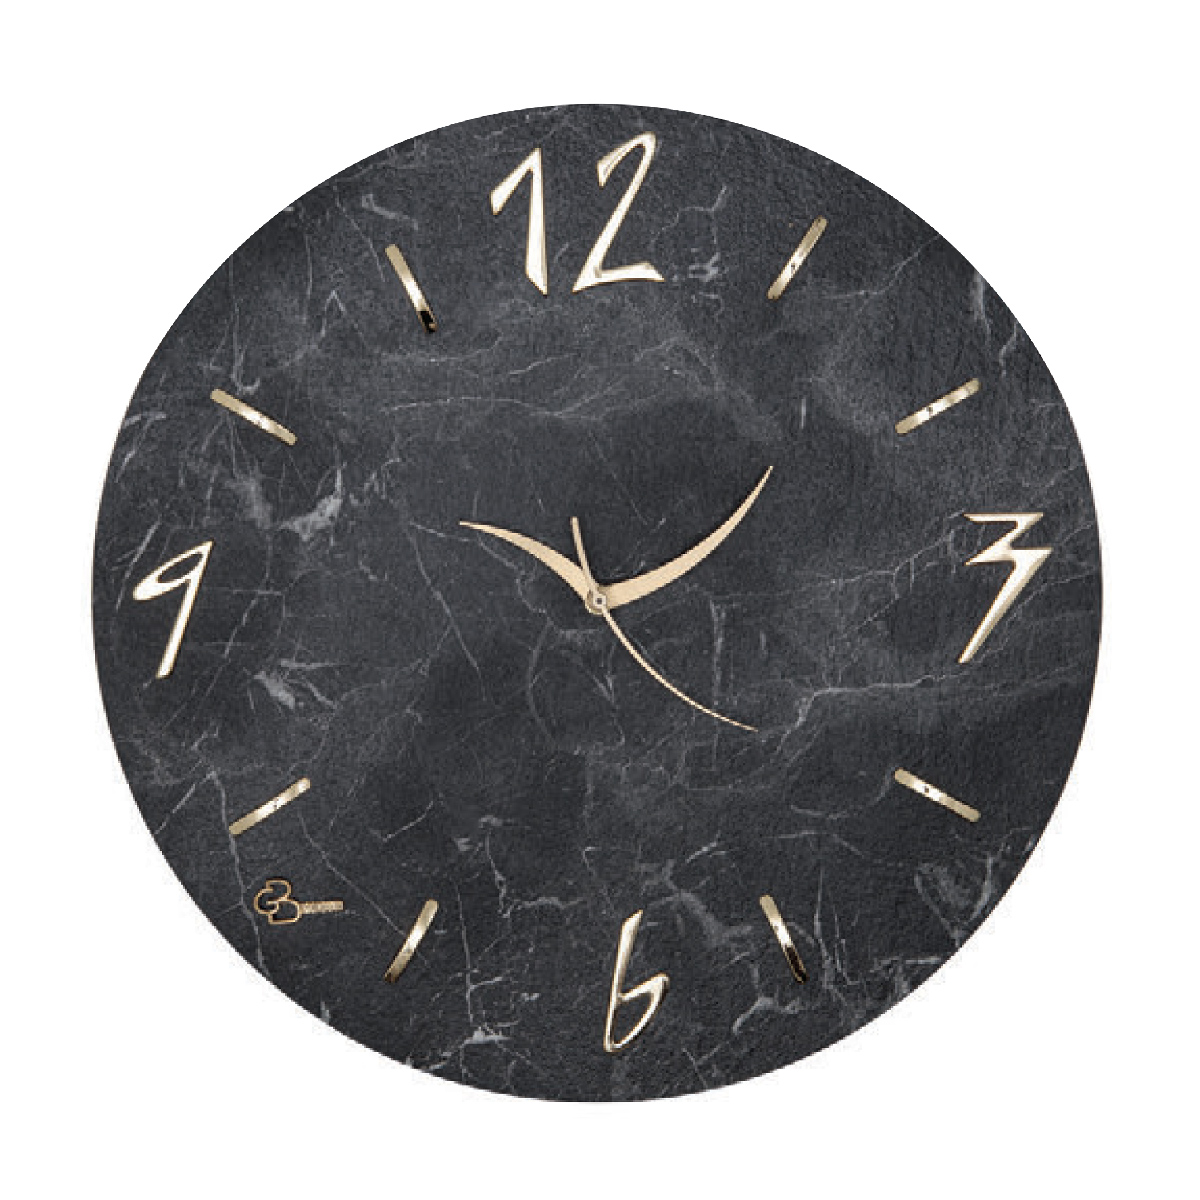 Orologio tondo da parete effetto marmo Brasile nero - diametro 40